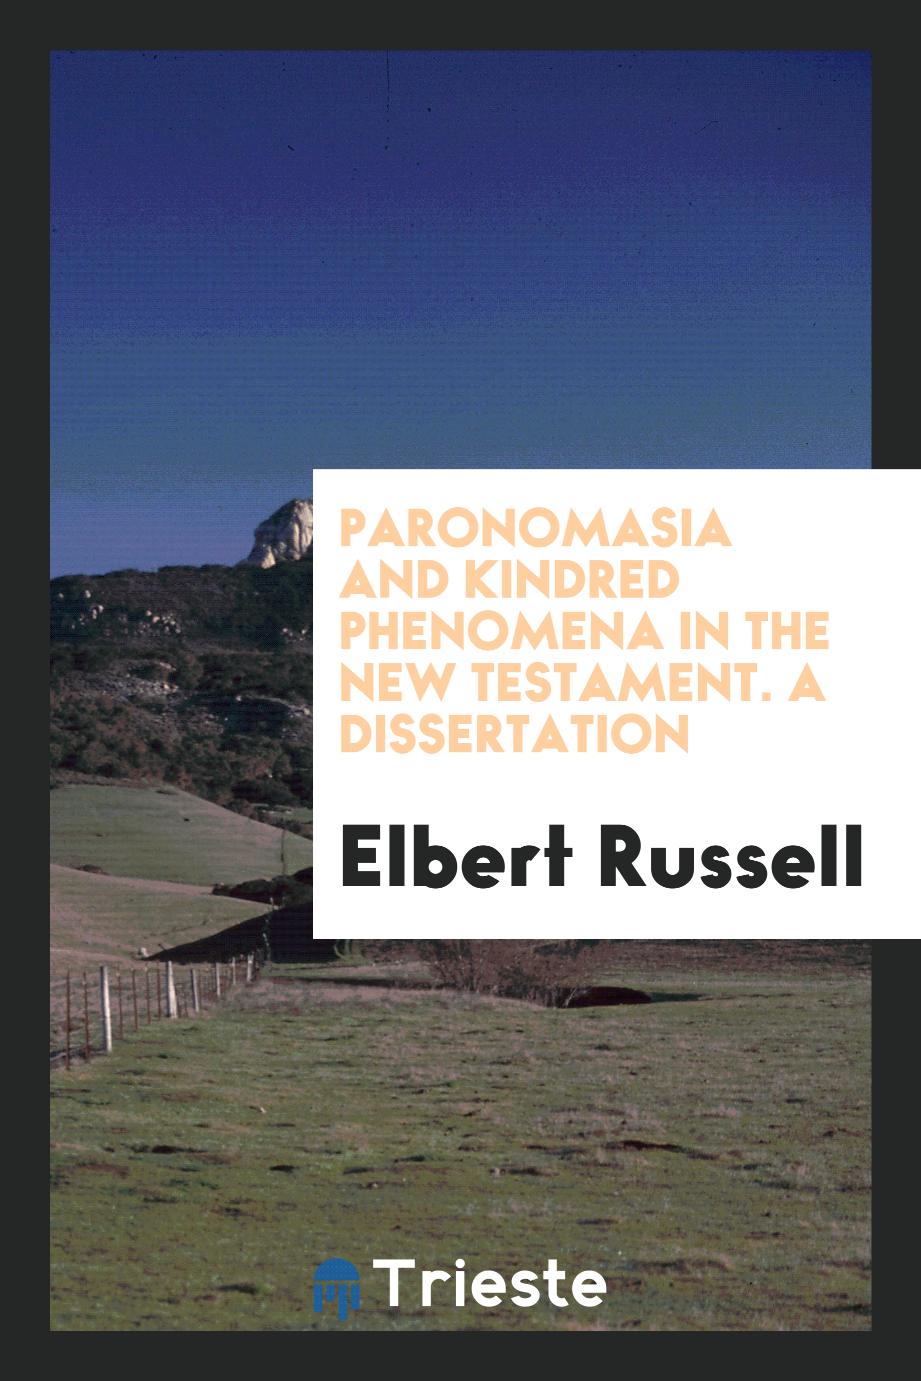 Paronomasia and kindred phenomena in the New Testament. A dissertation